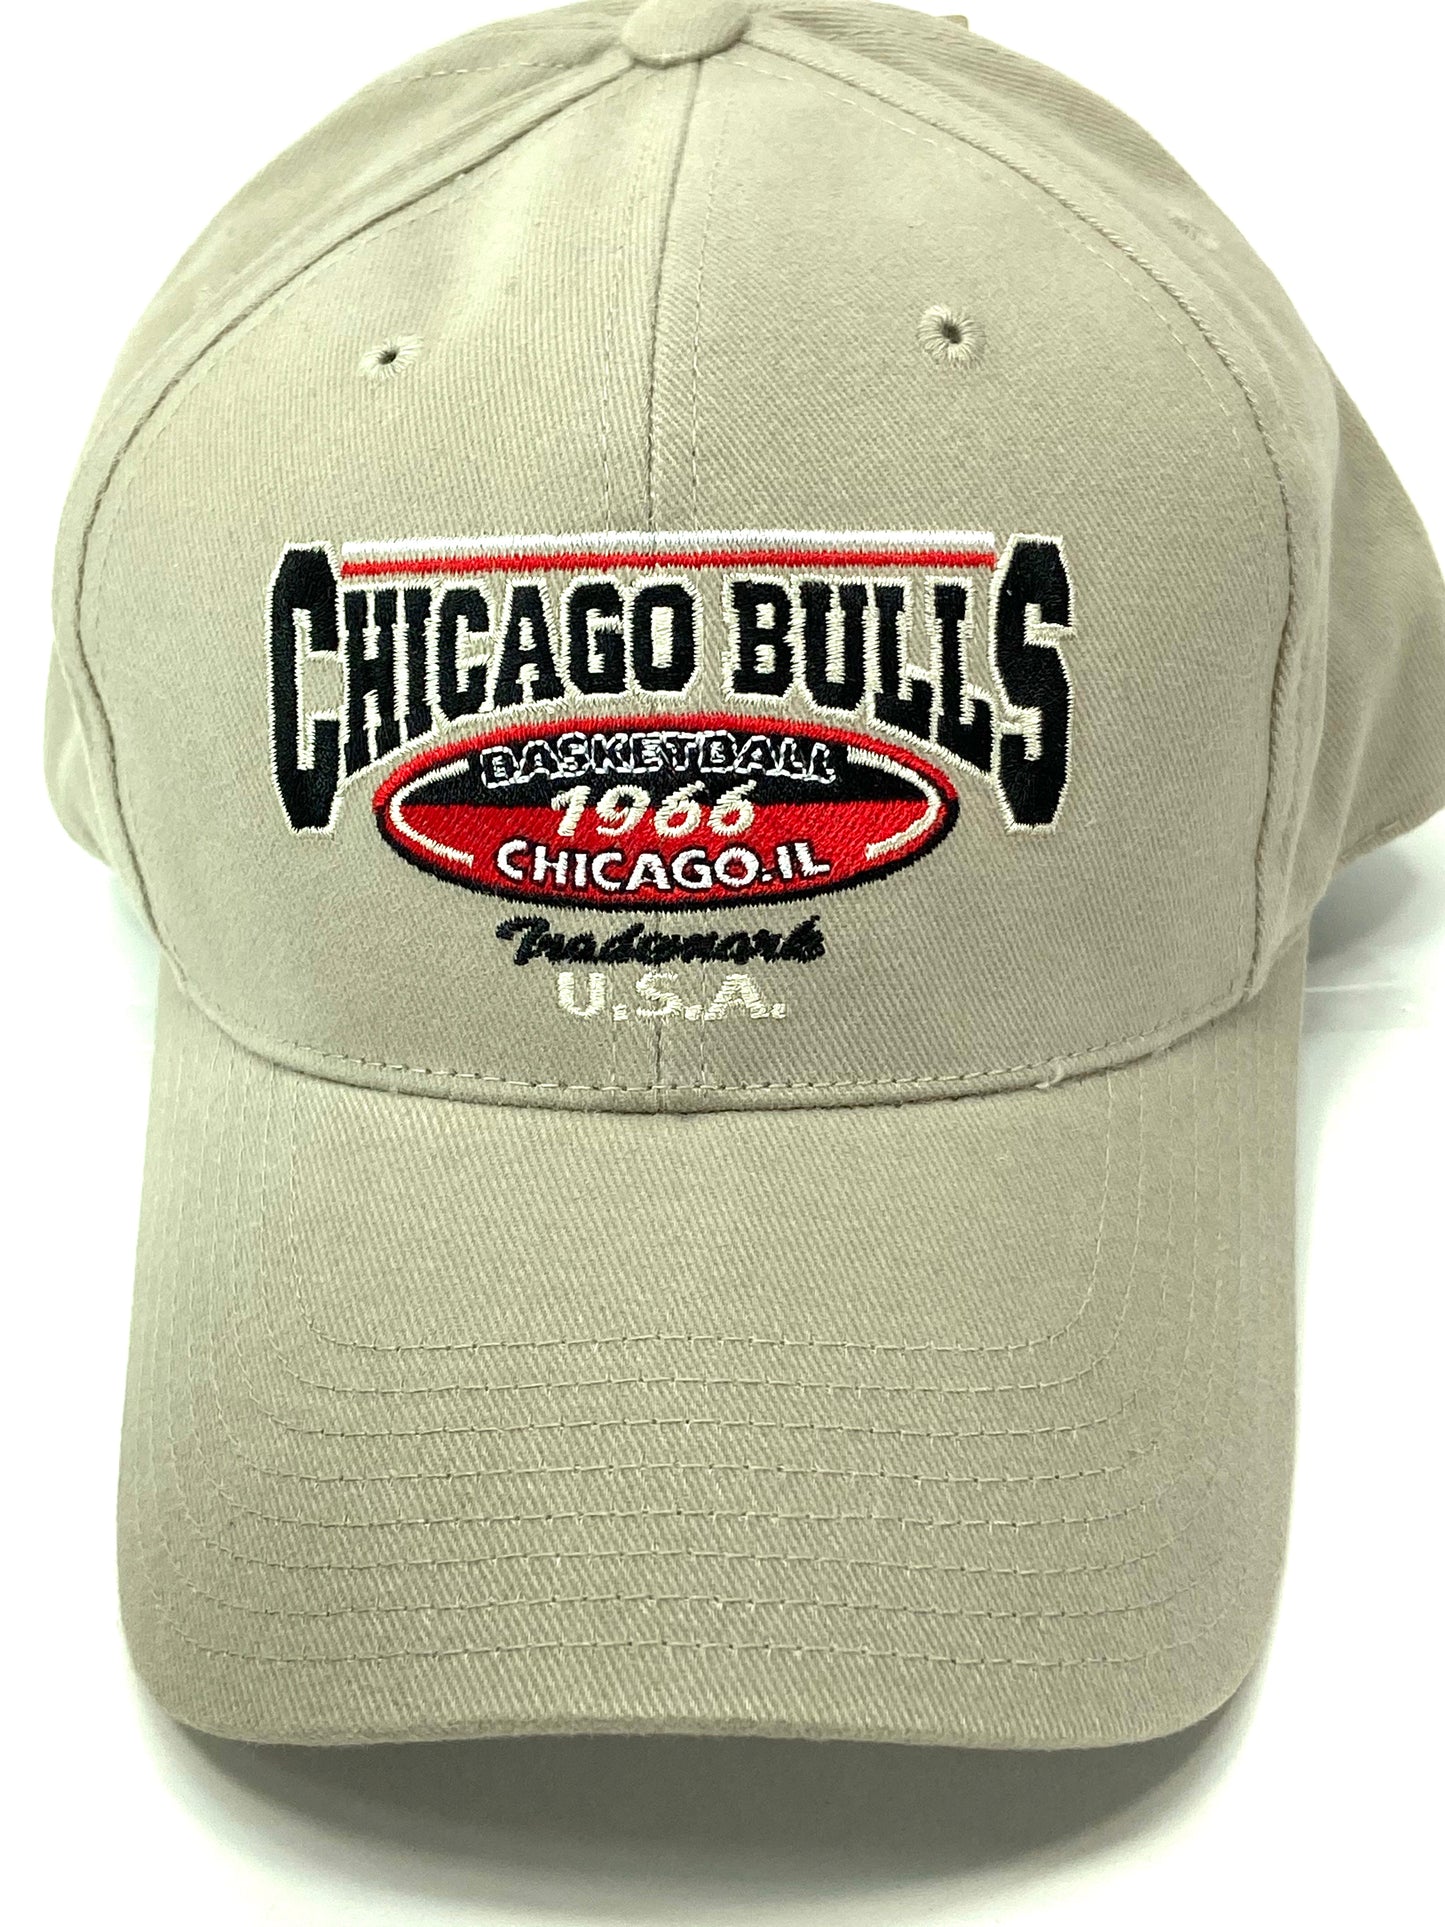 Chicago Bulls Classic NBA Khaki 2006 "Basketball 1966" Hat by Annco